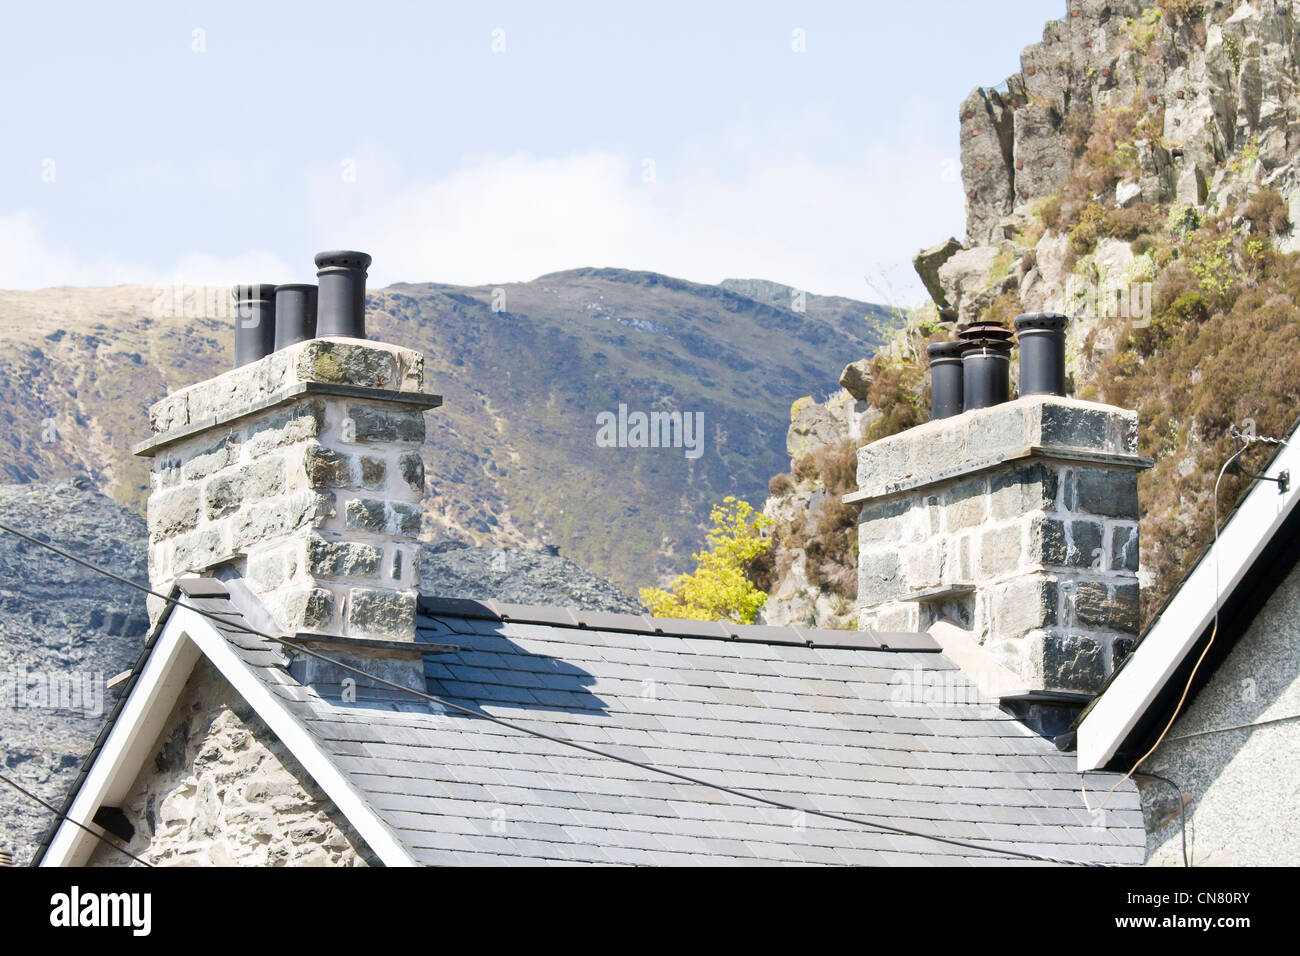 Blaenau Ffestiniog slate roof on houses with chimneys Stock Photo